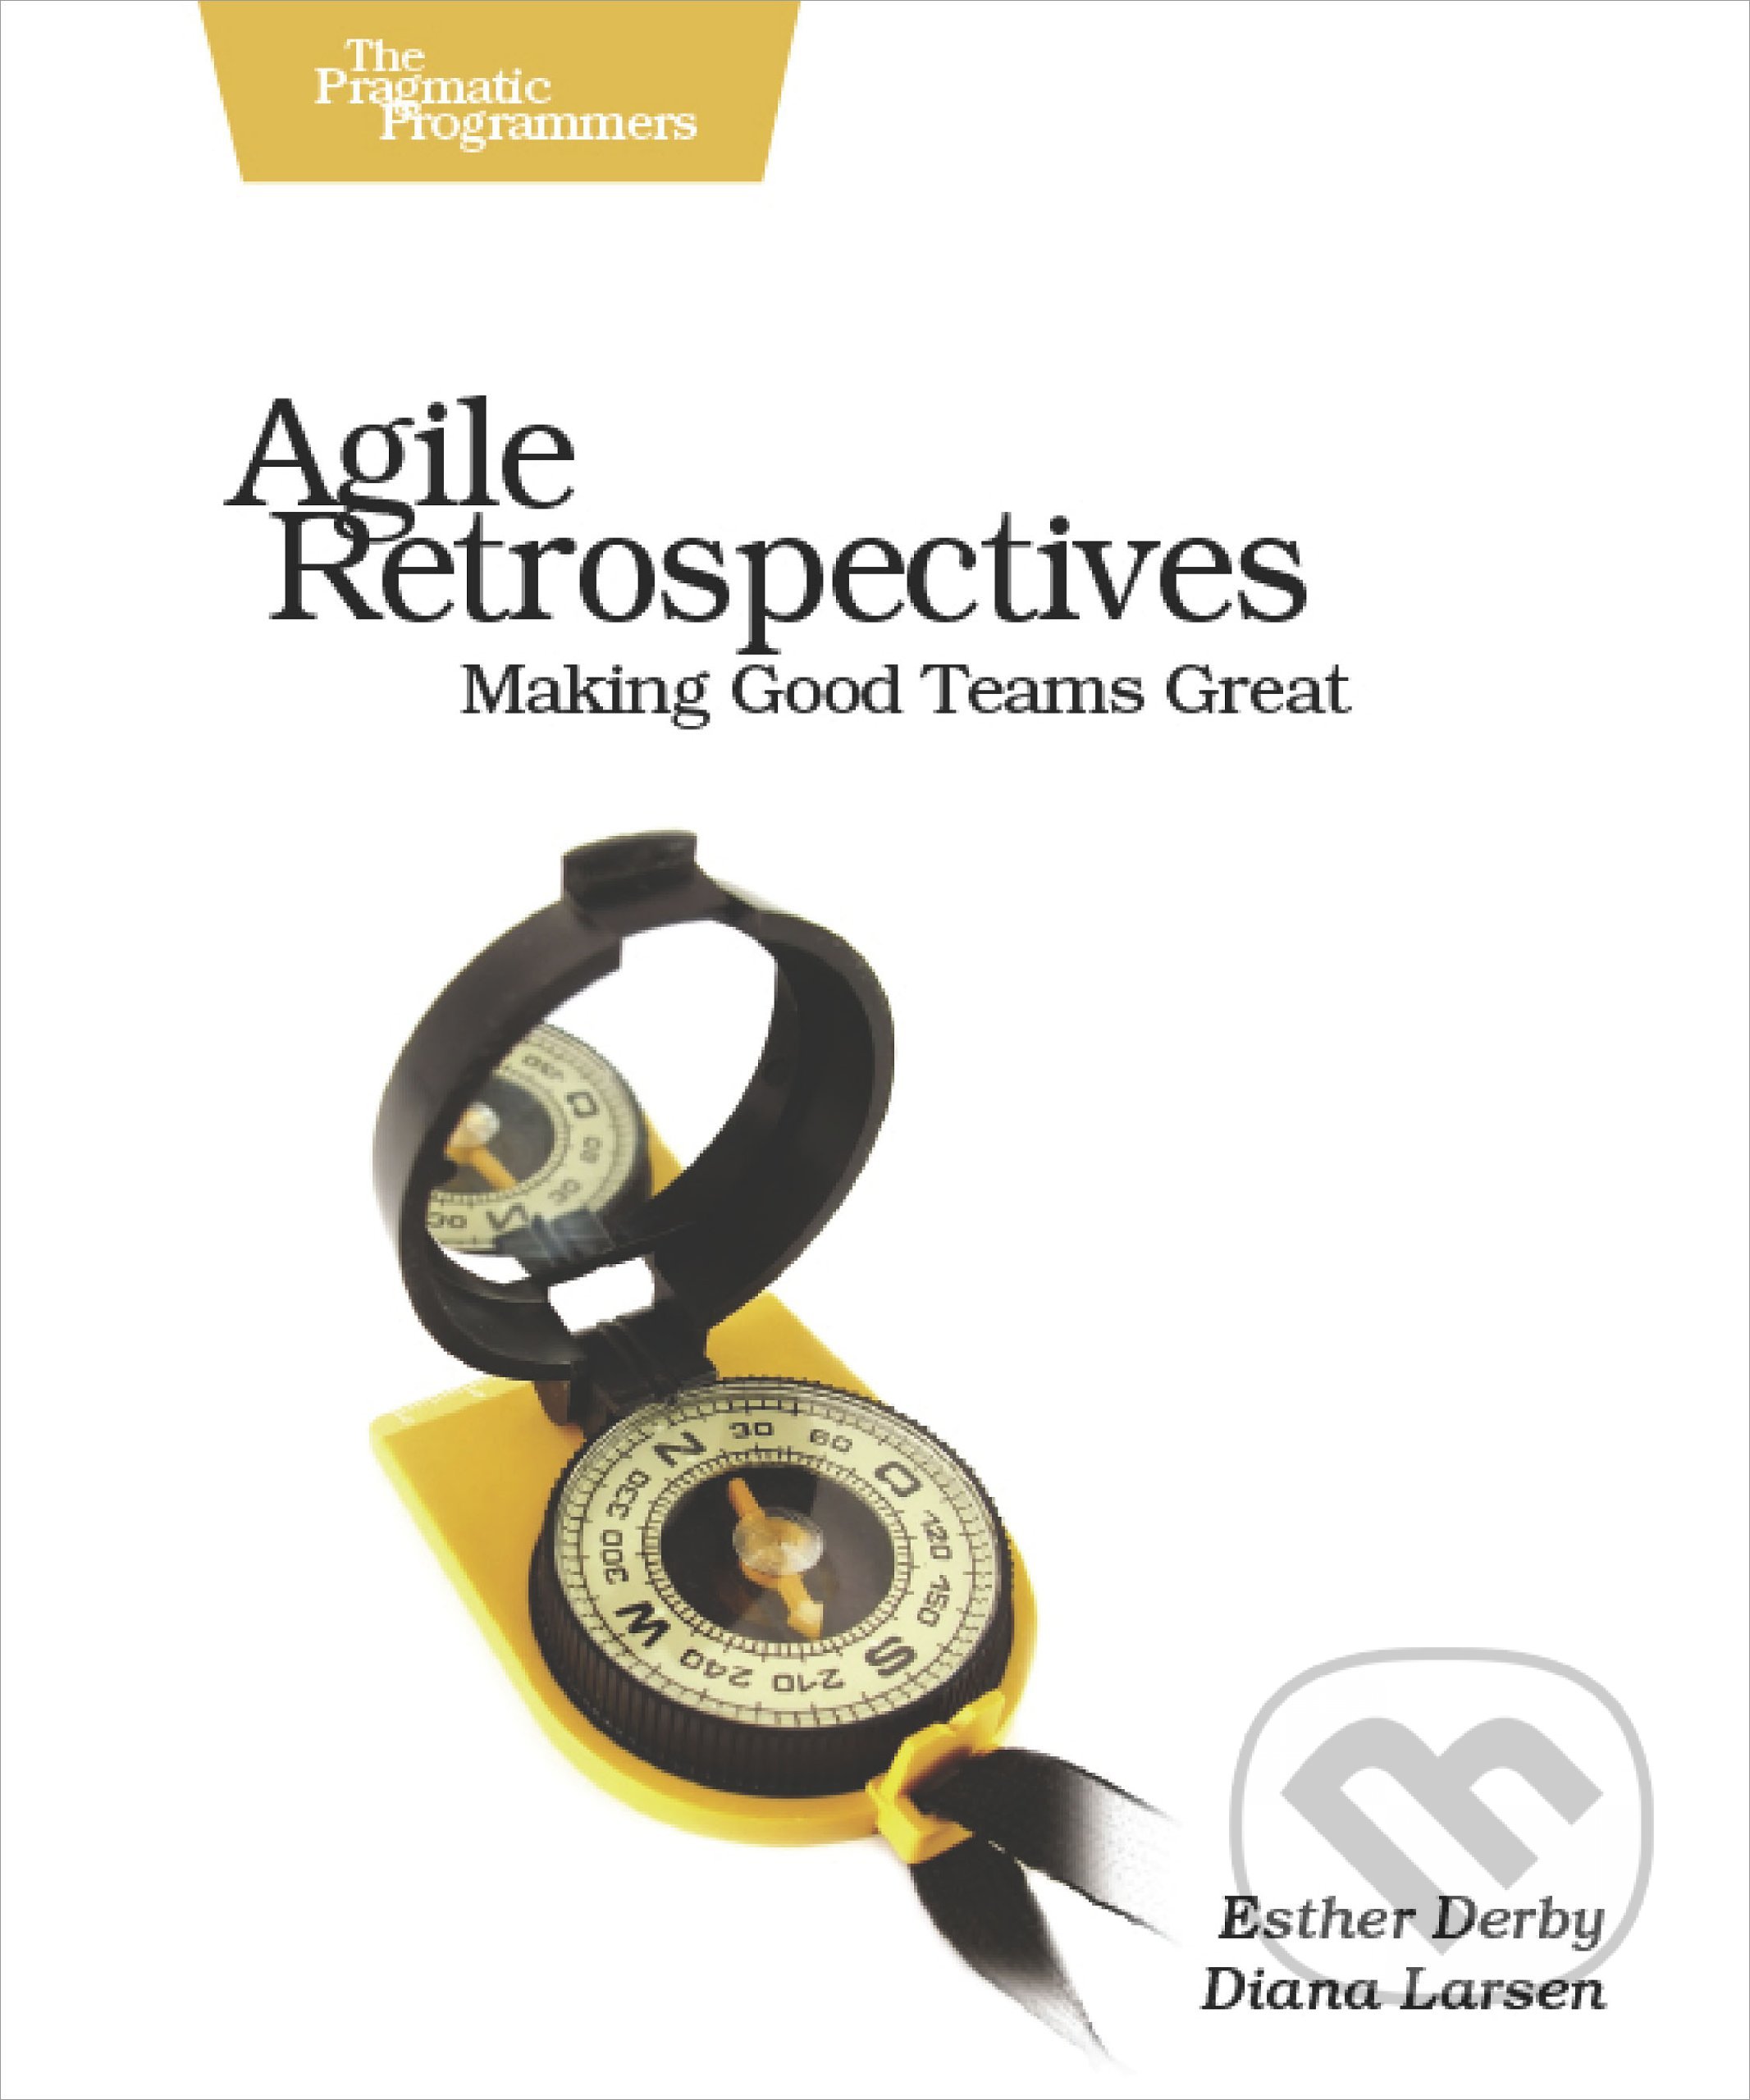 Agile Retrospectives - Esther Derby, Diana Larsen, Ken Schwaber, The Pragmatic Programmers, 2006